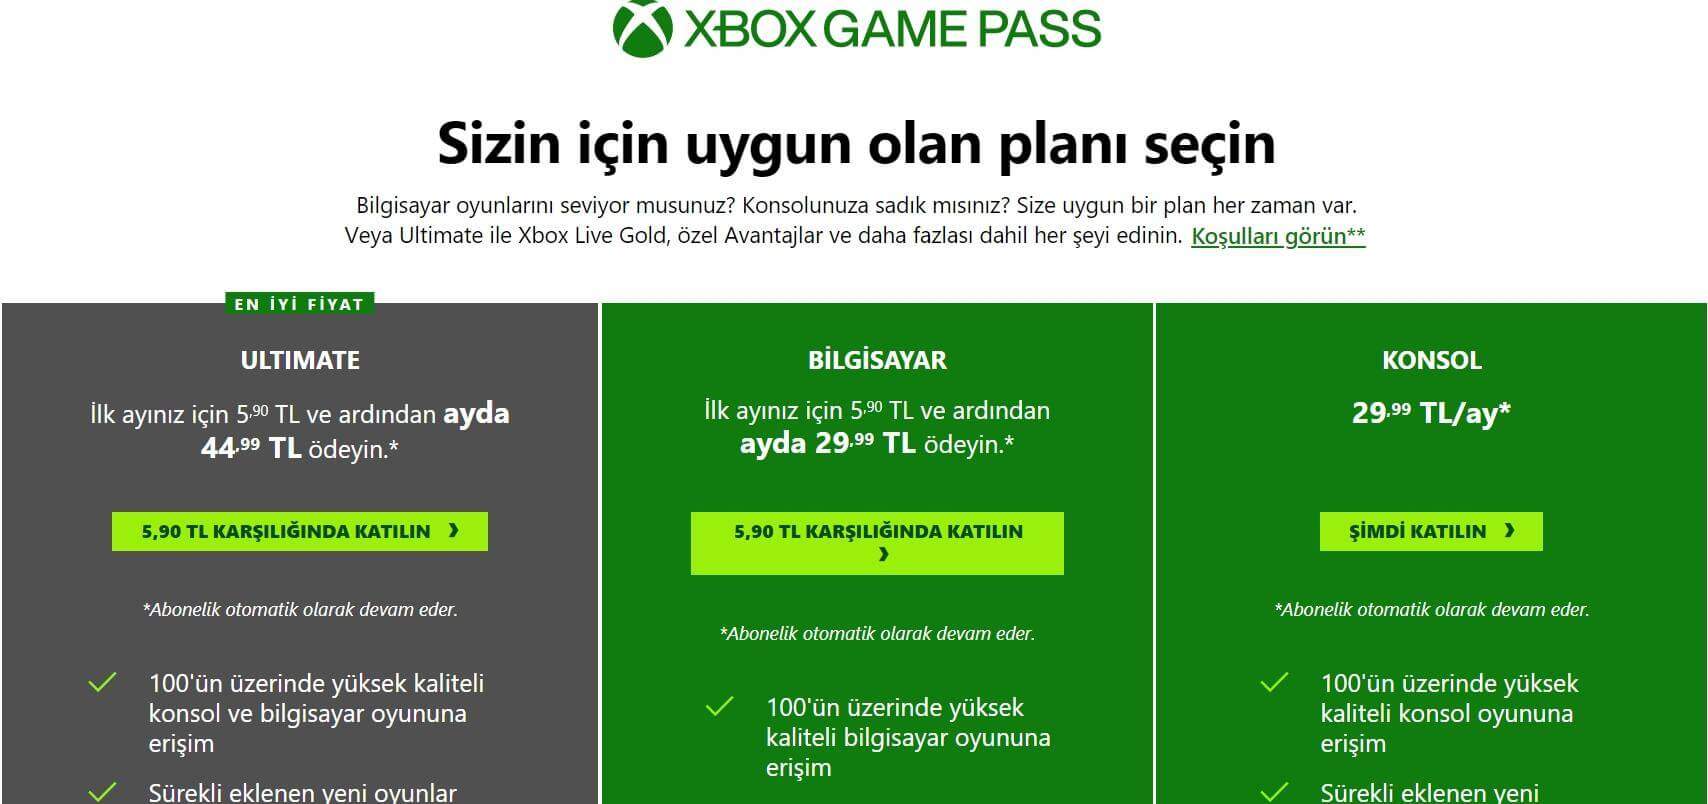 Xbox Game Pass Nedir